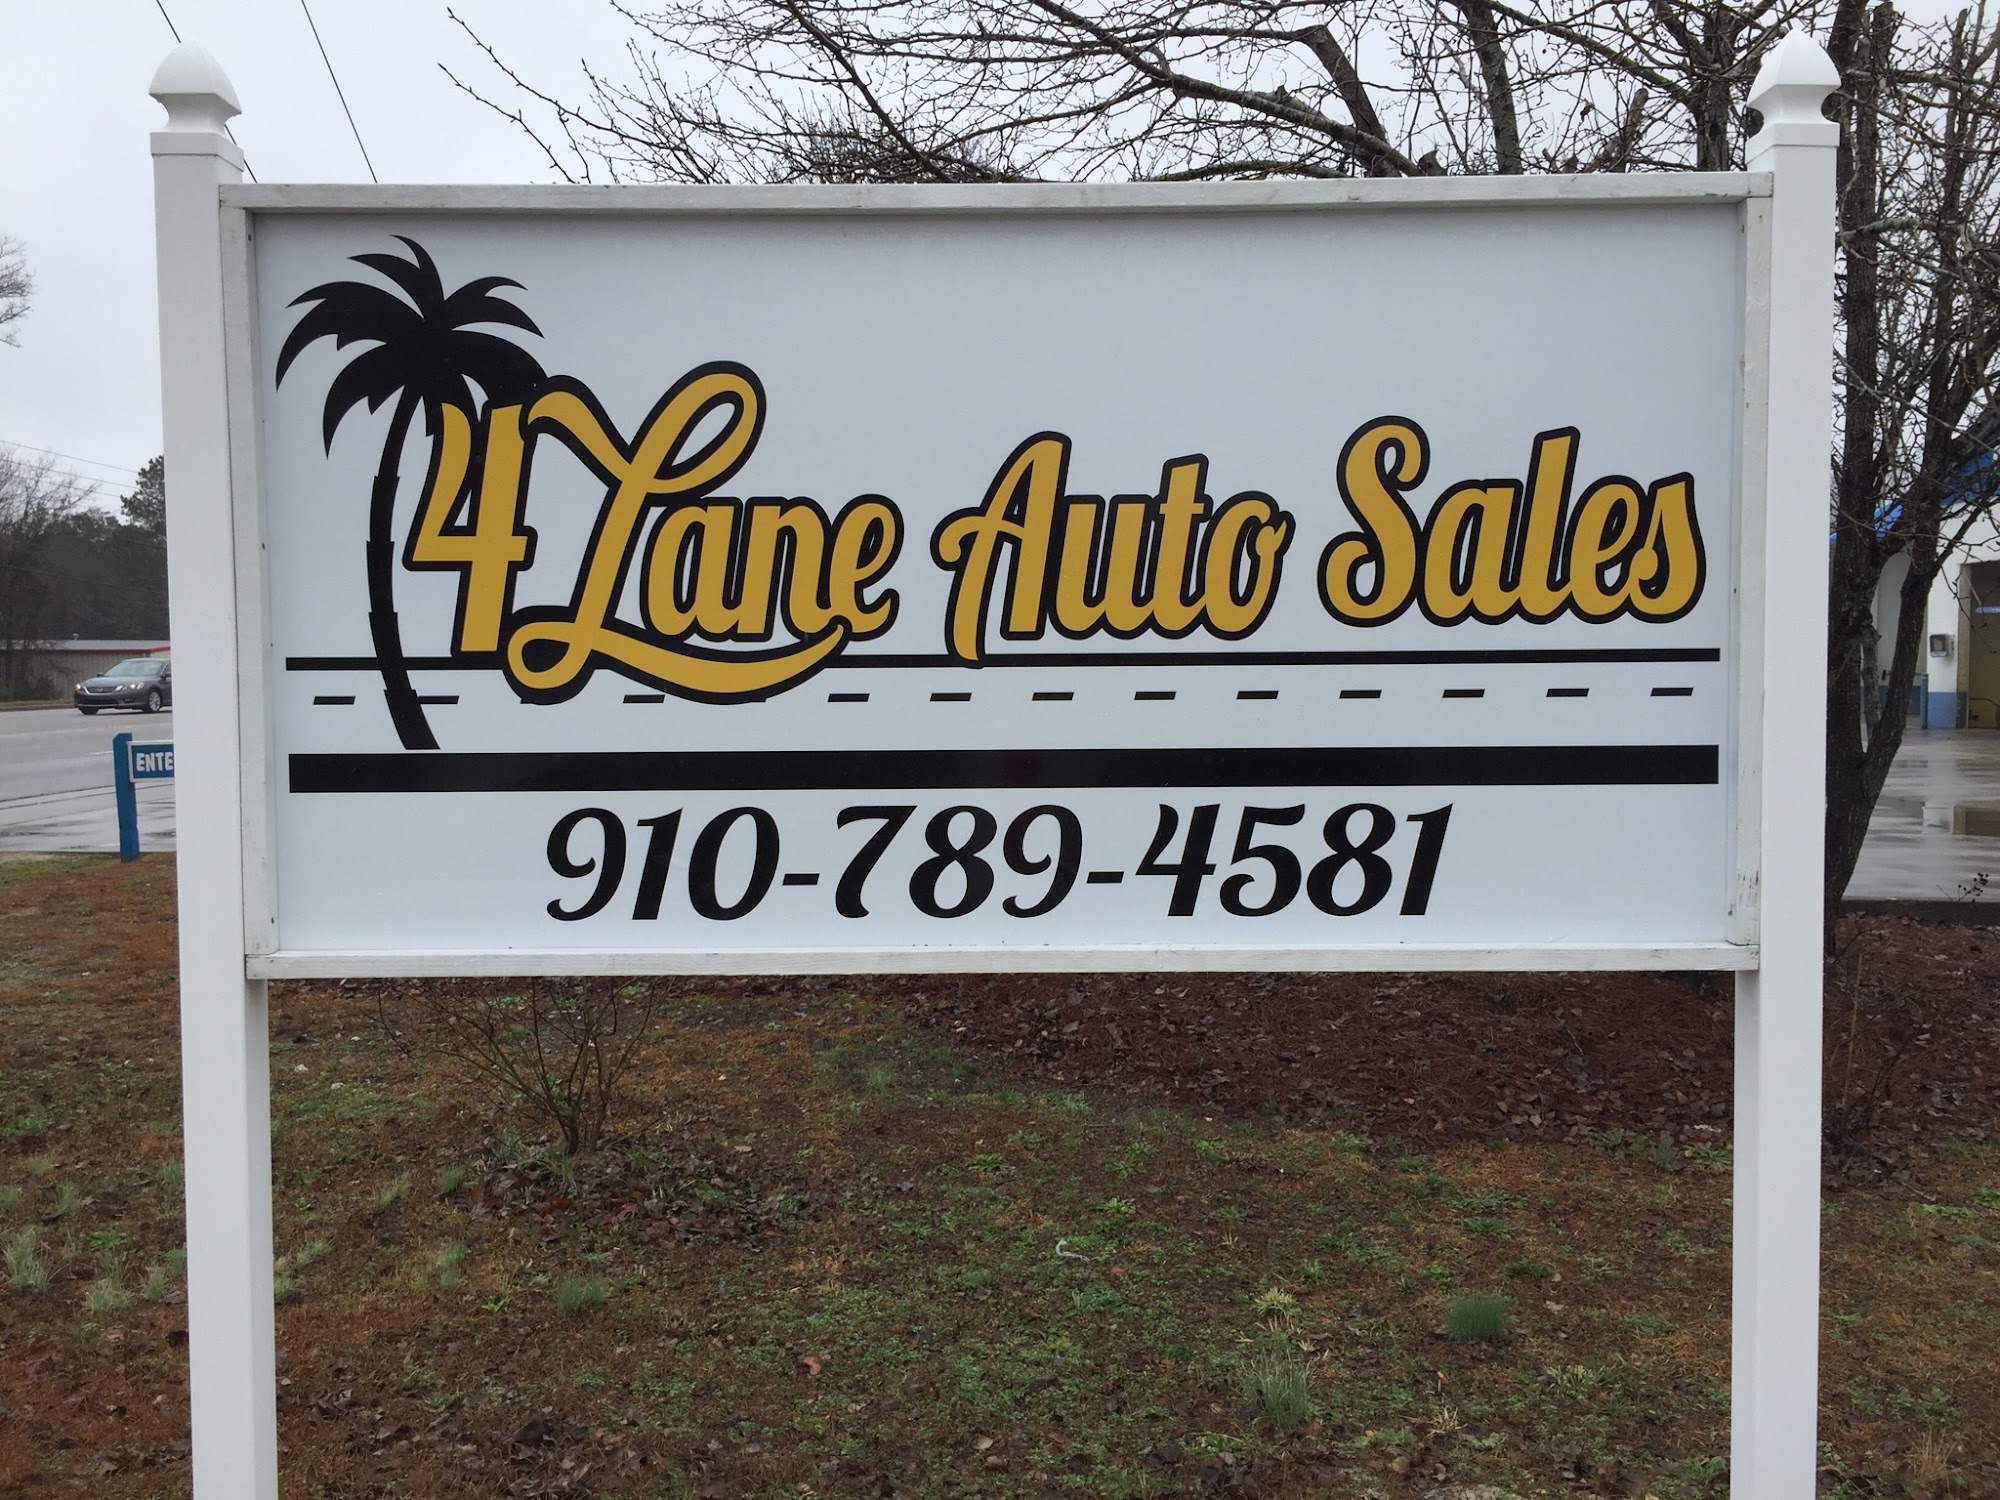 4 Lane Auto Sales, LLC